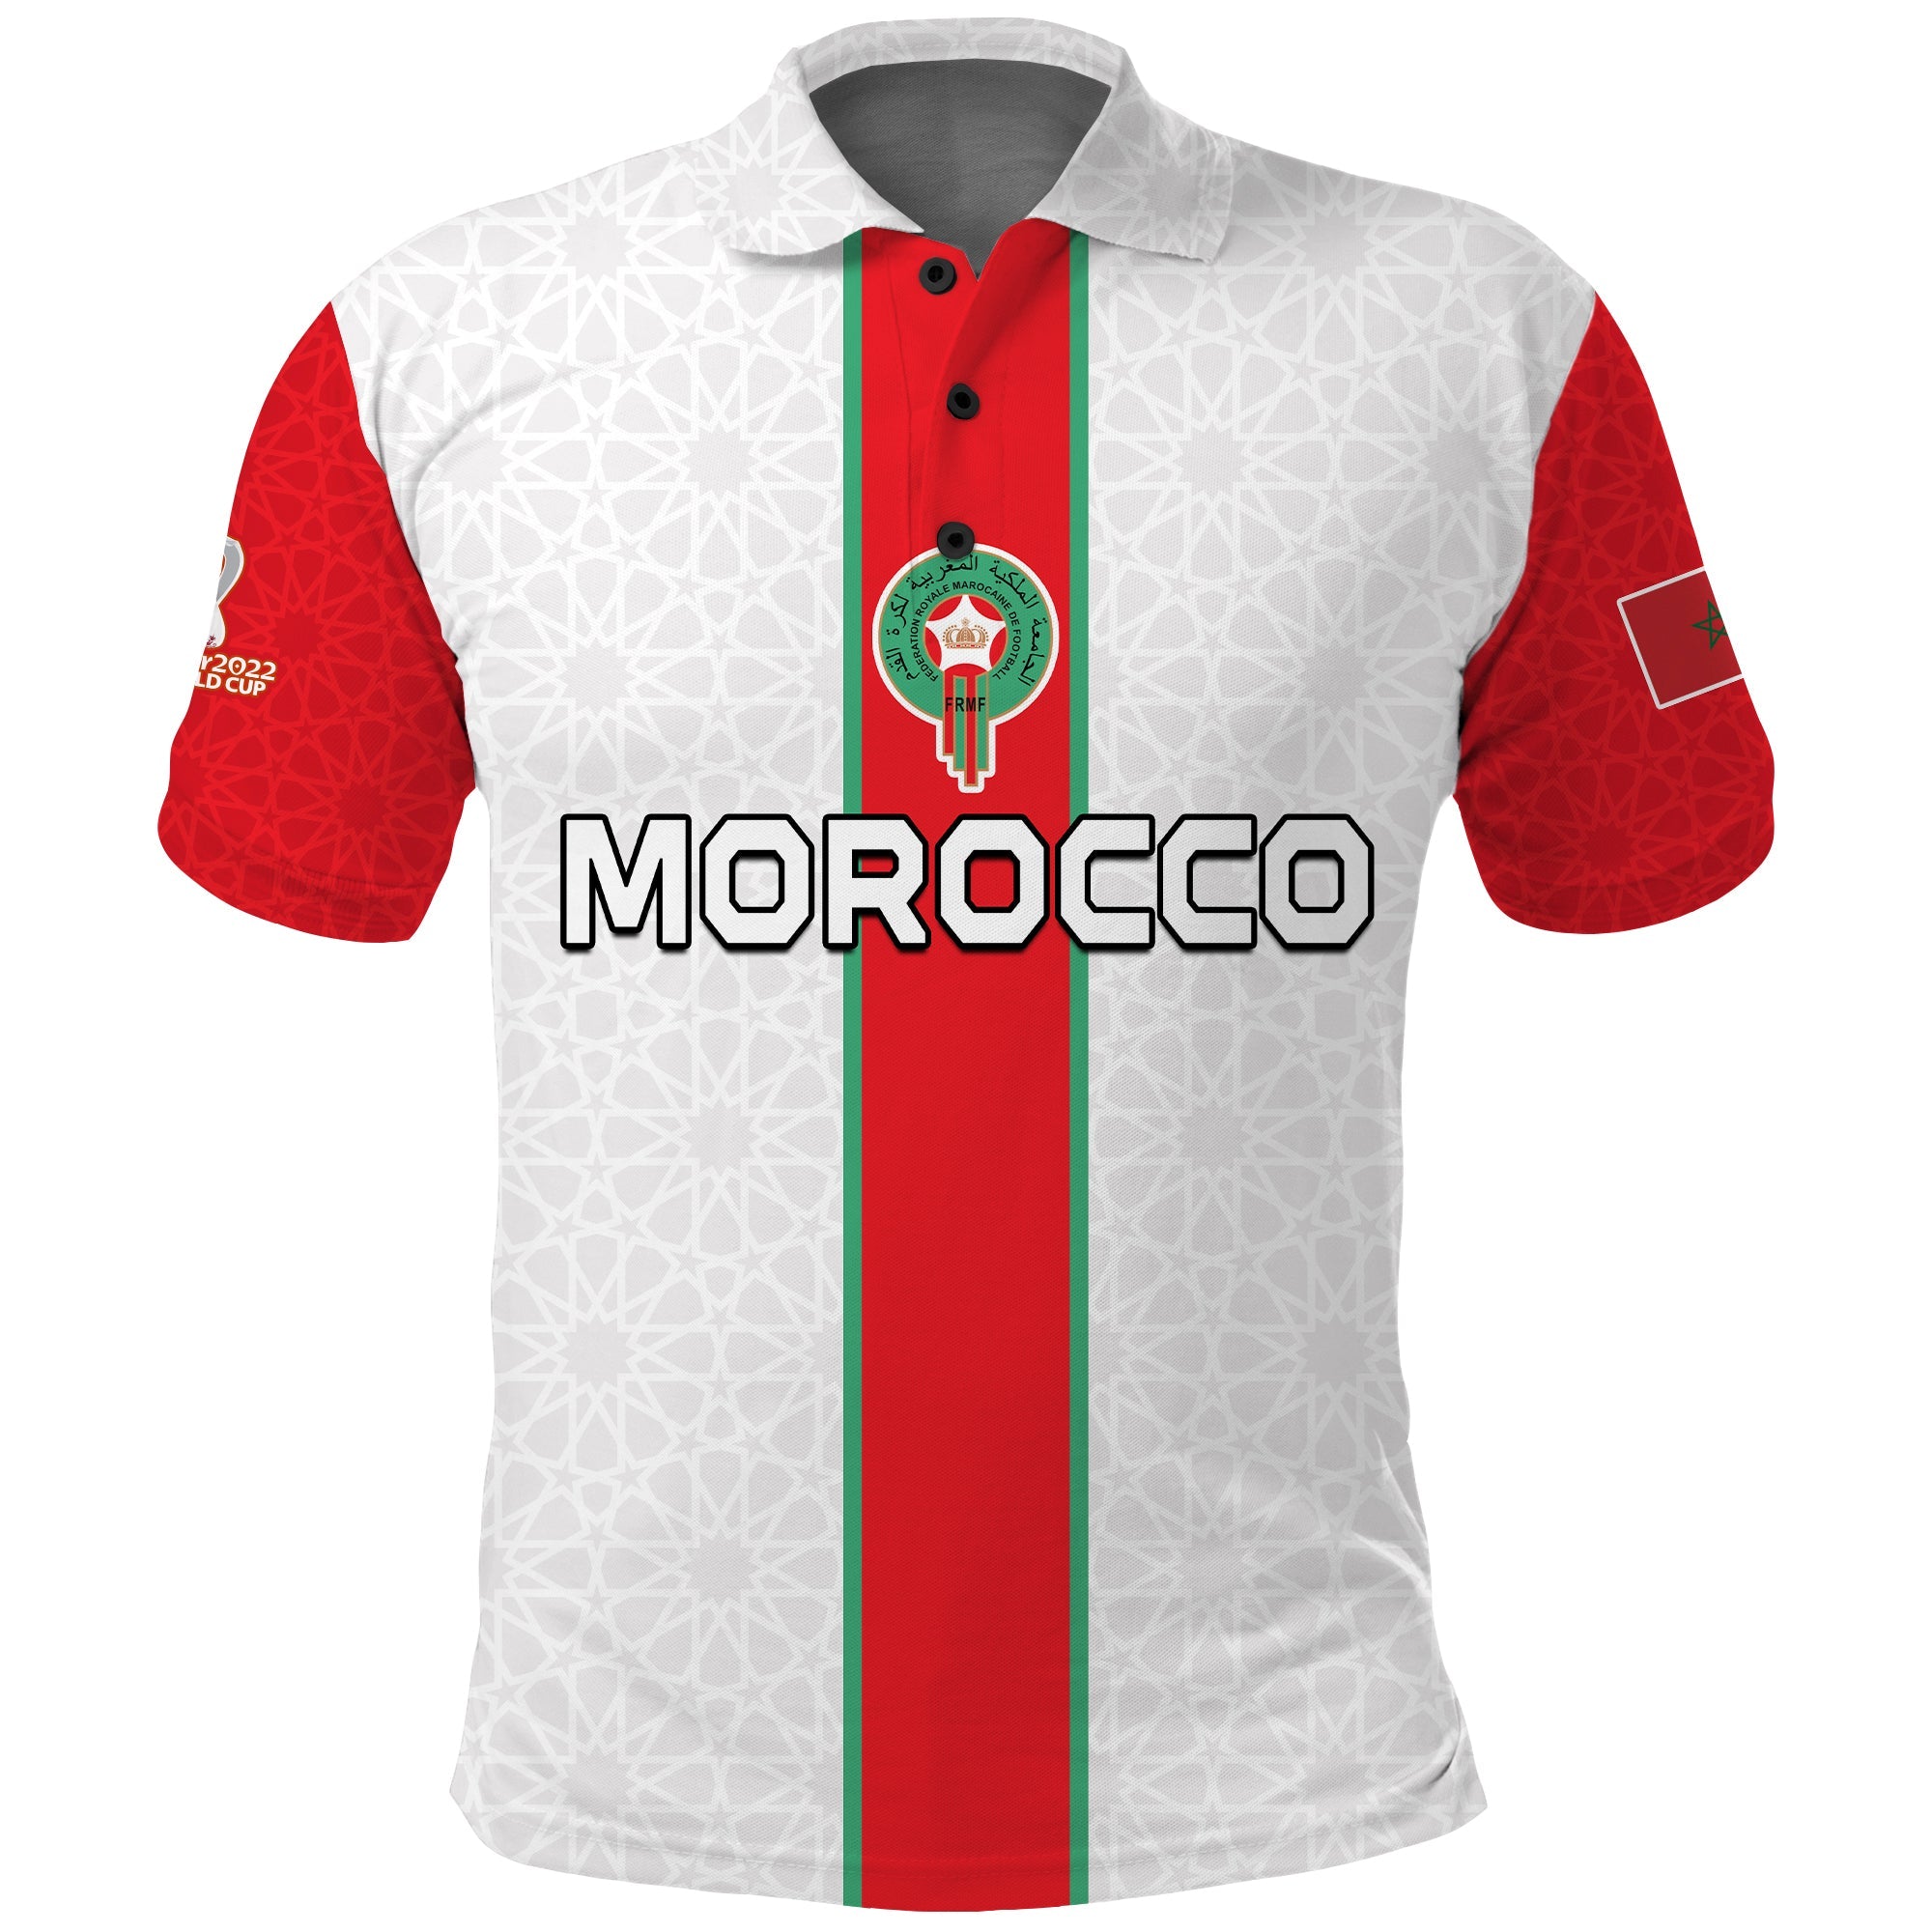 morocco-football-polo-shirt-world-cup-2022-soccer-lions-de-latlas-champions